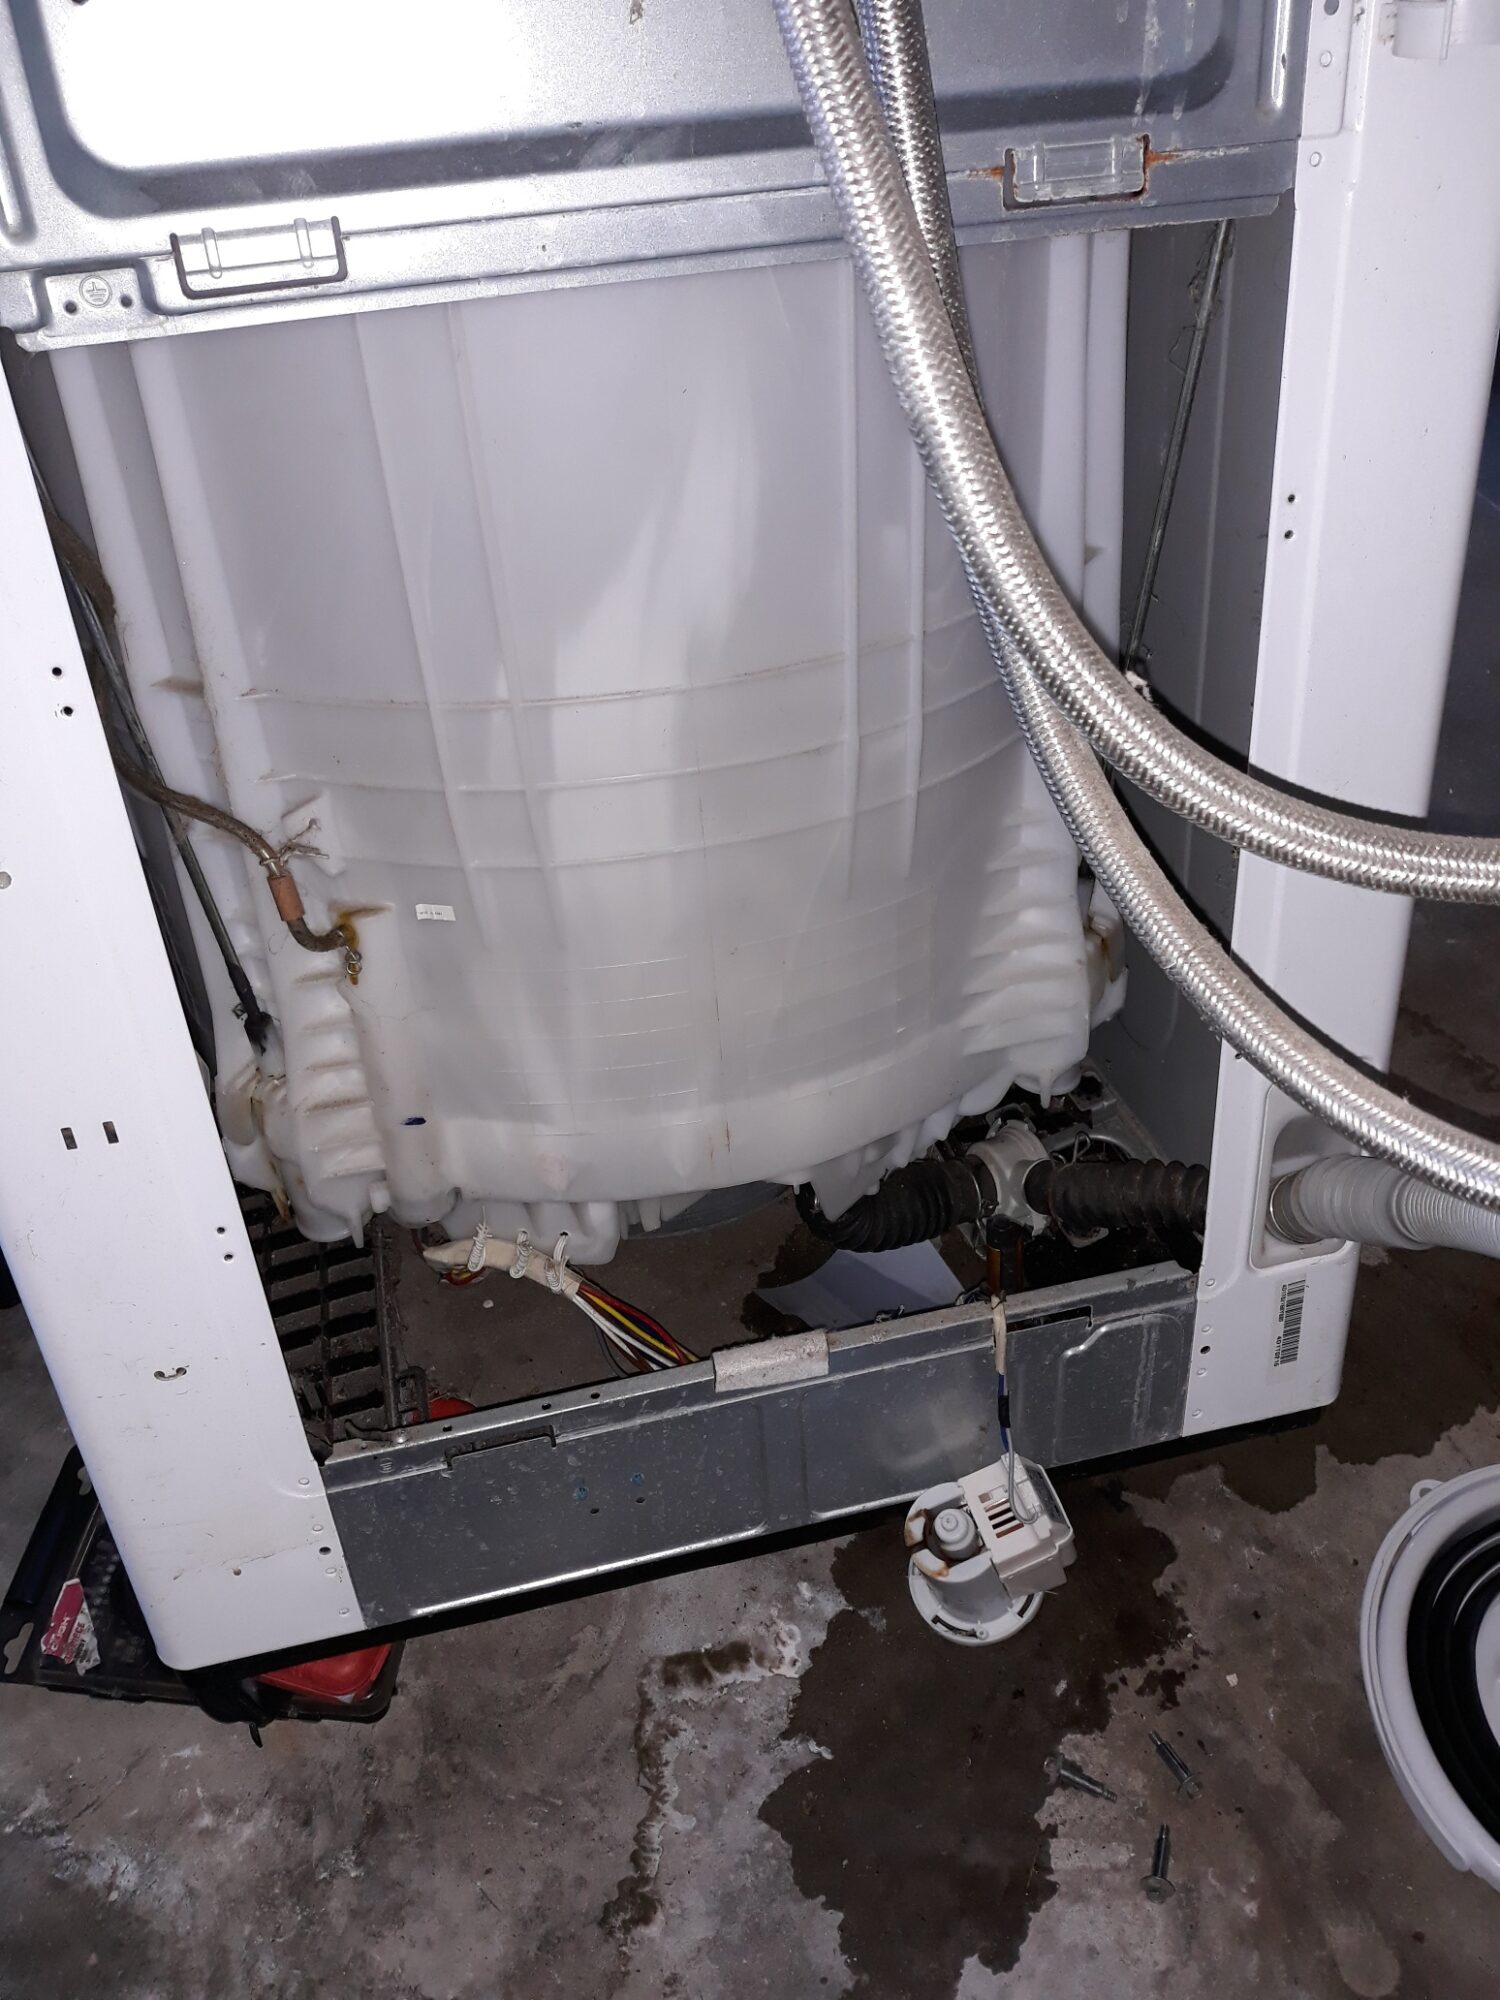 appliance repair washing machine repair repaired by replacement of the broken drain pump motor assembly park drive leesburg fl 34748